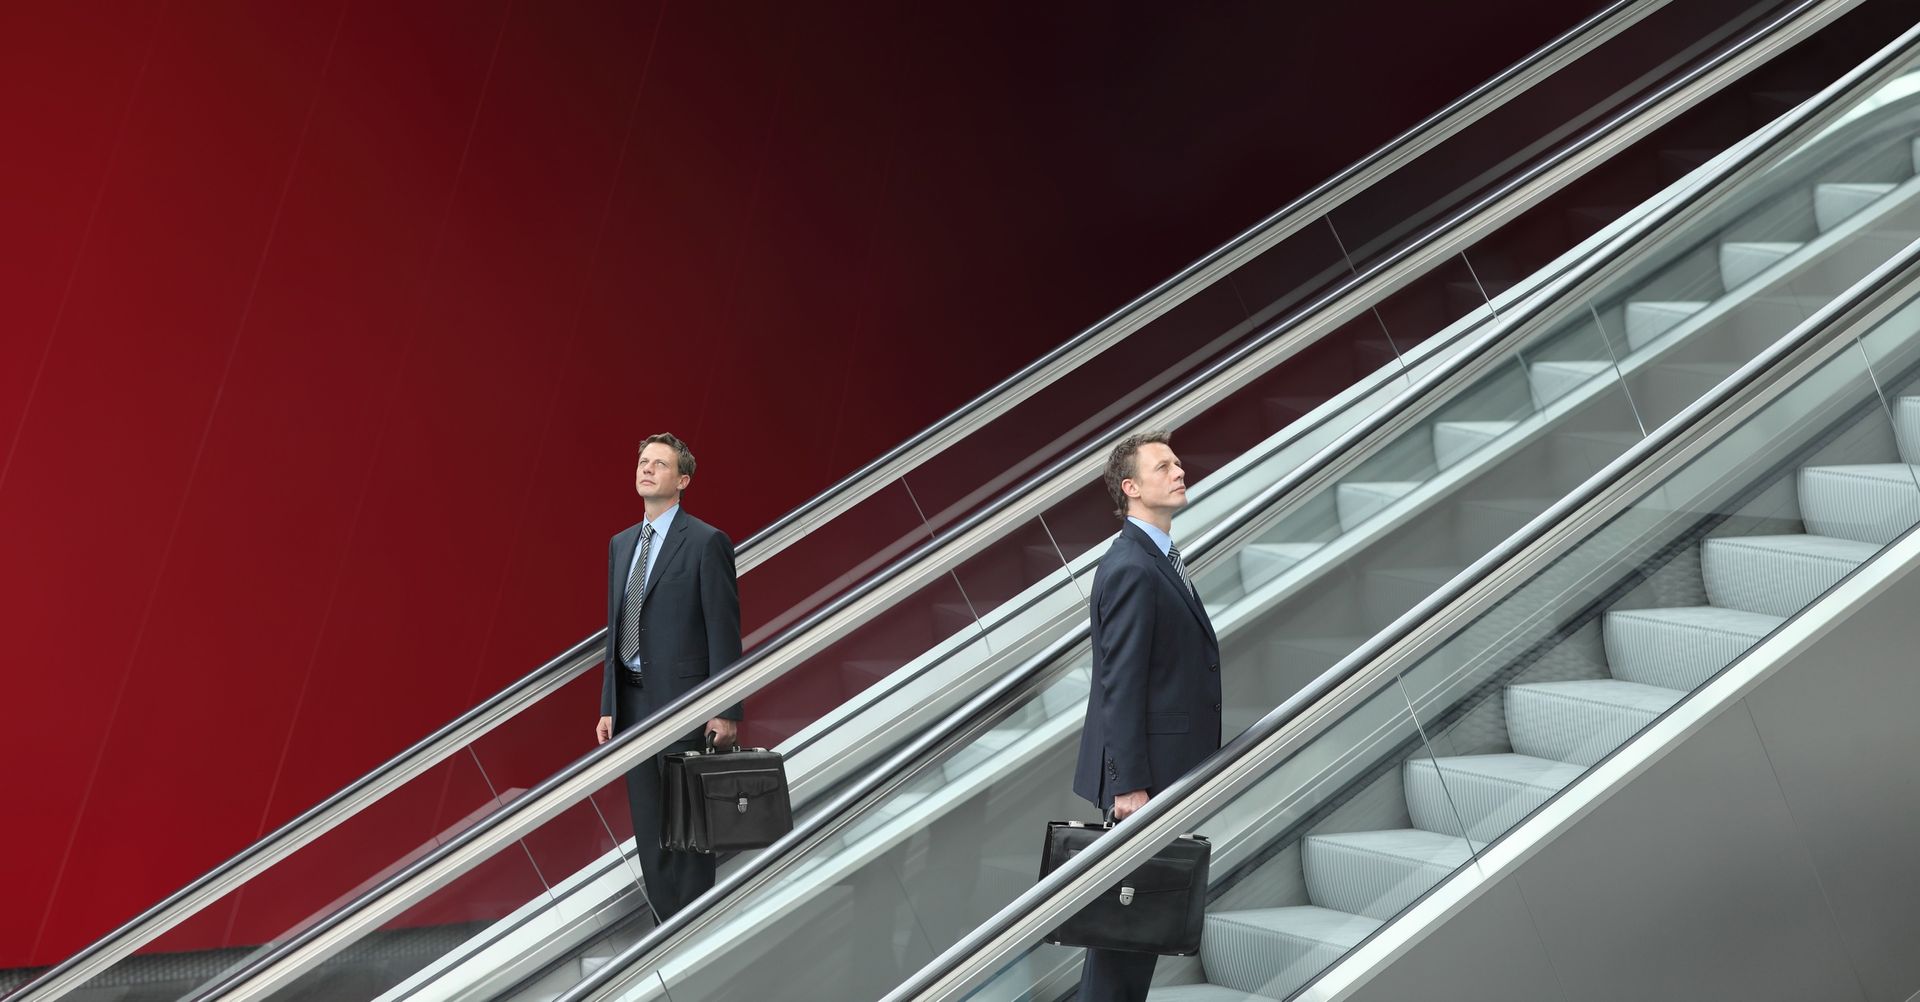 two men are walking up a set of escalators